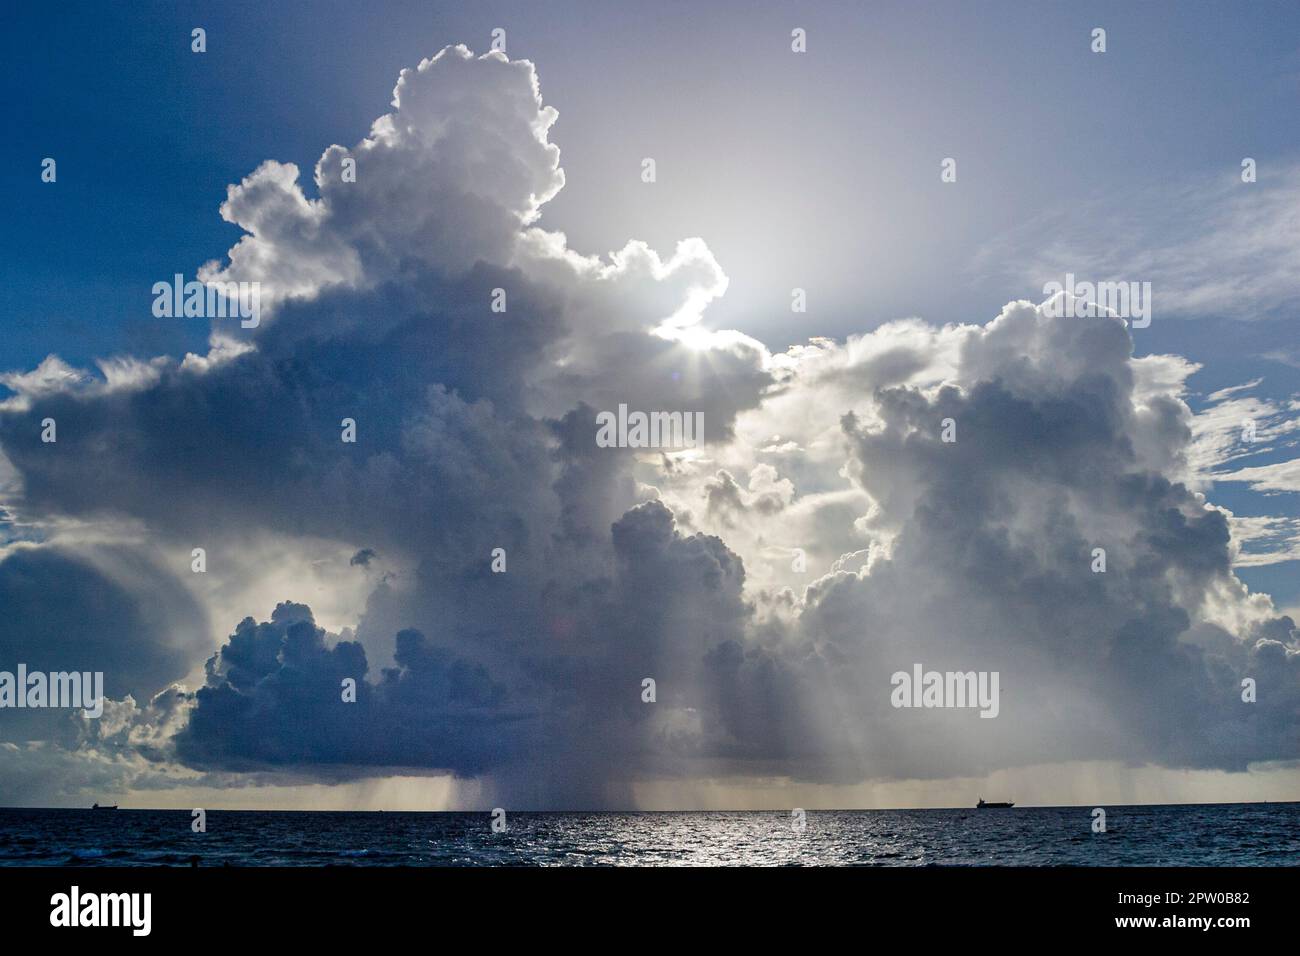 Miami Beach Florida, Atlantikküste, Sonnenaufgang Wolken Wetter Klimawandel Sturmregen, Stockfoto